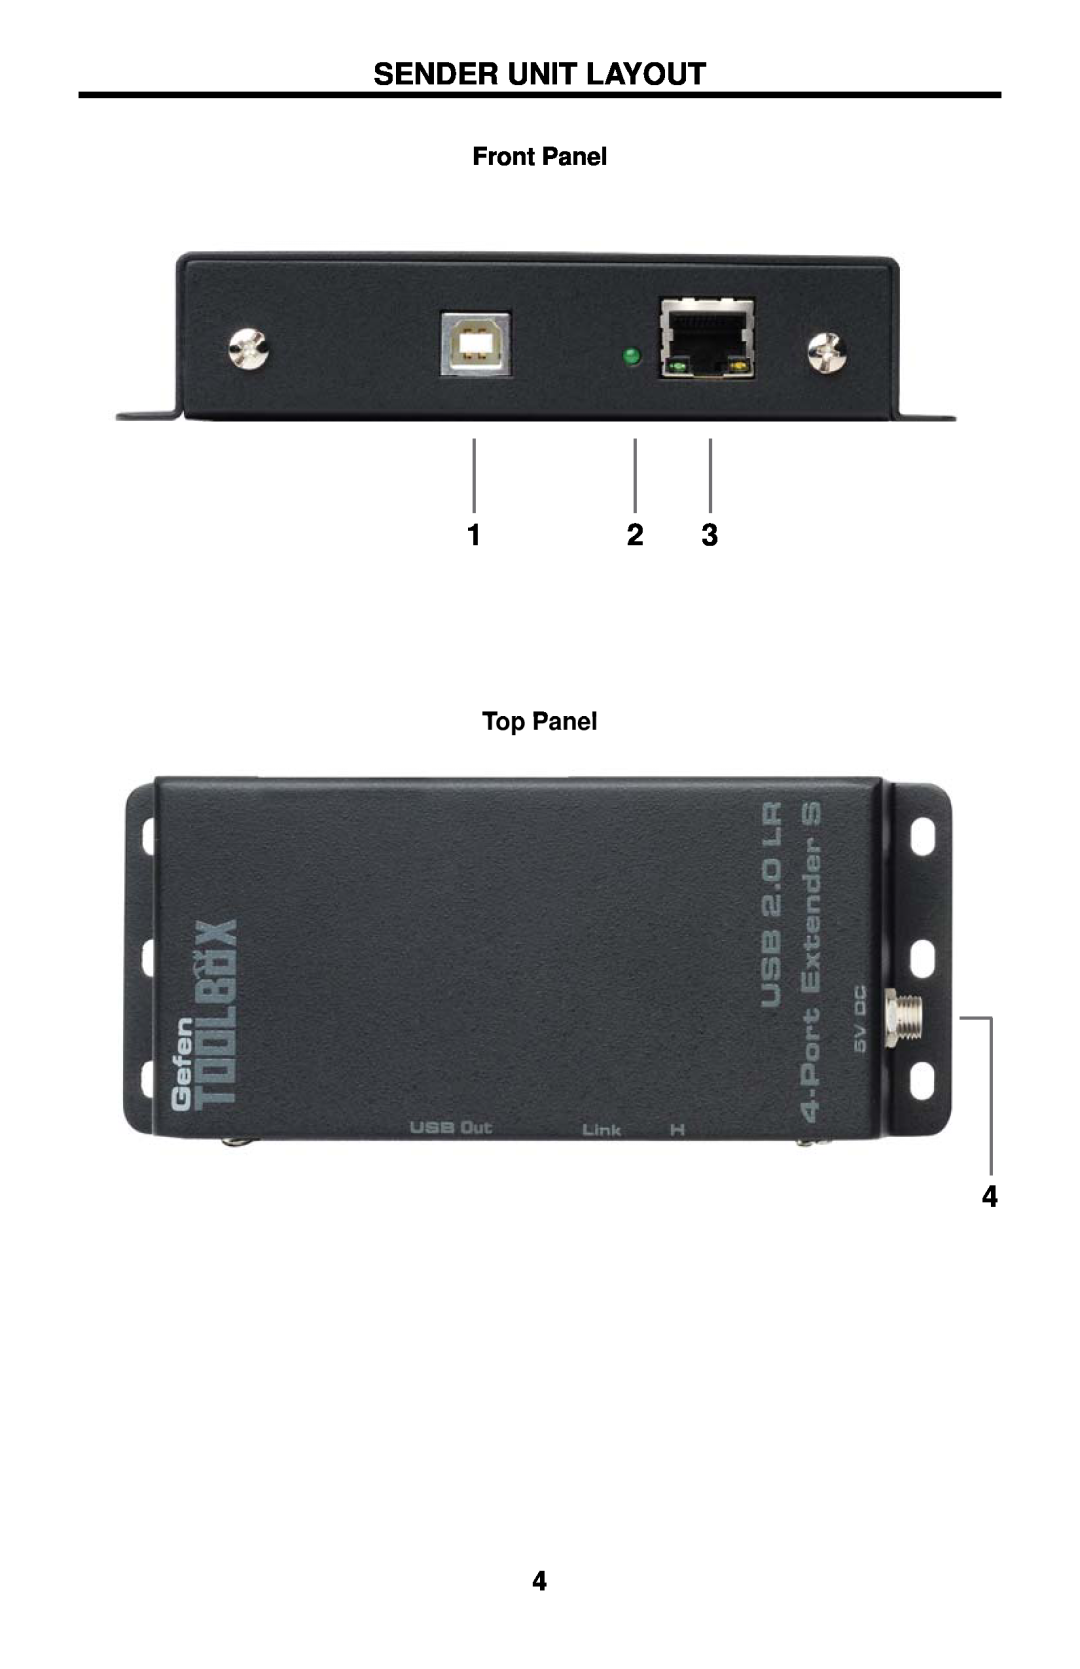 Gefen GTB-USB2.0-4LR user manual Sender Unit Layout, Front Panel, Top Panel 